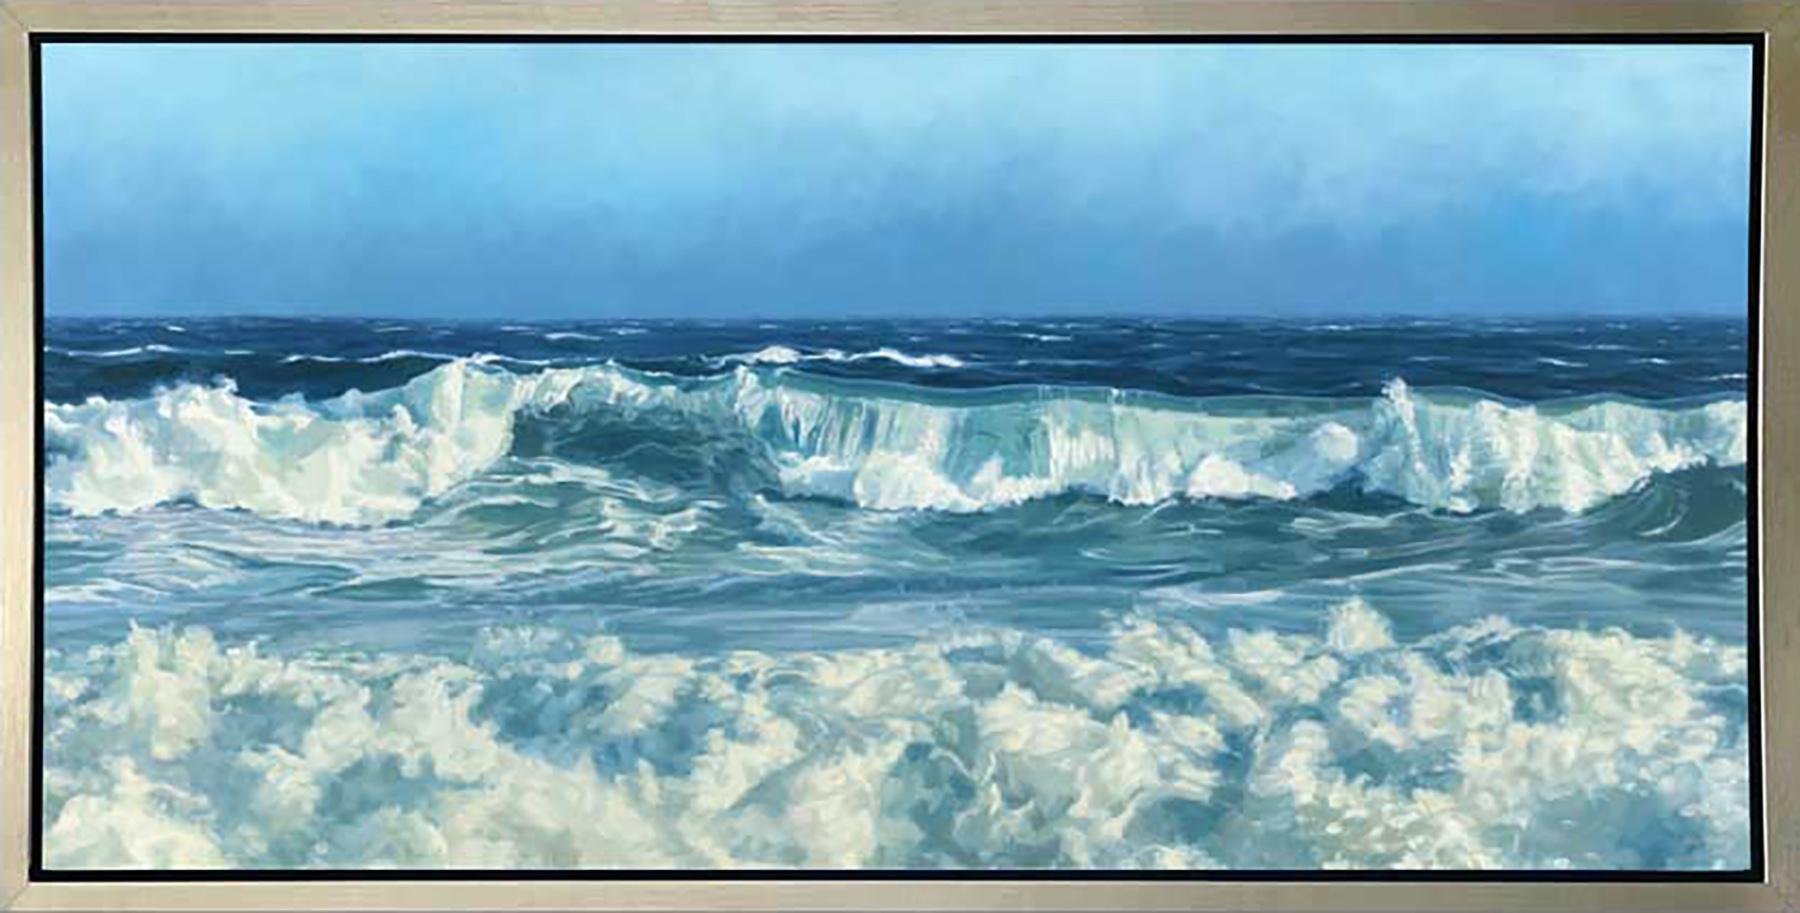 John Harris (painter) Landscape Print - "Oceanic, " Limited Edition Giclee Print, 12" x 24"